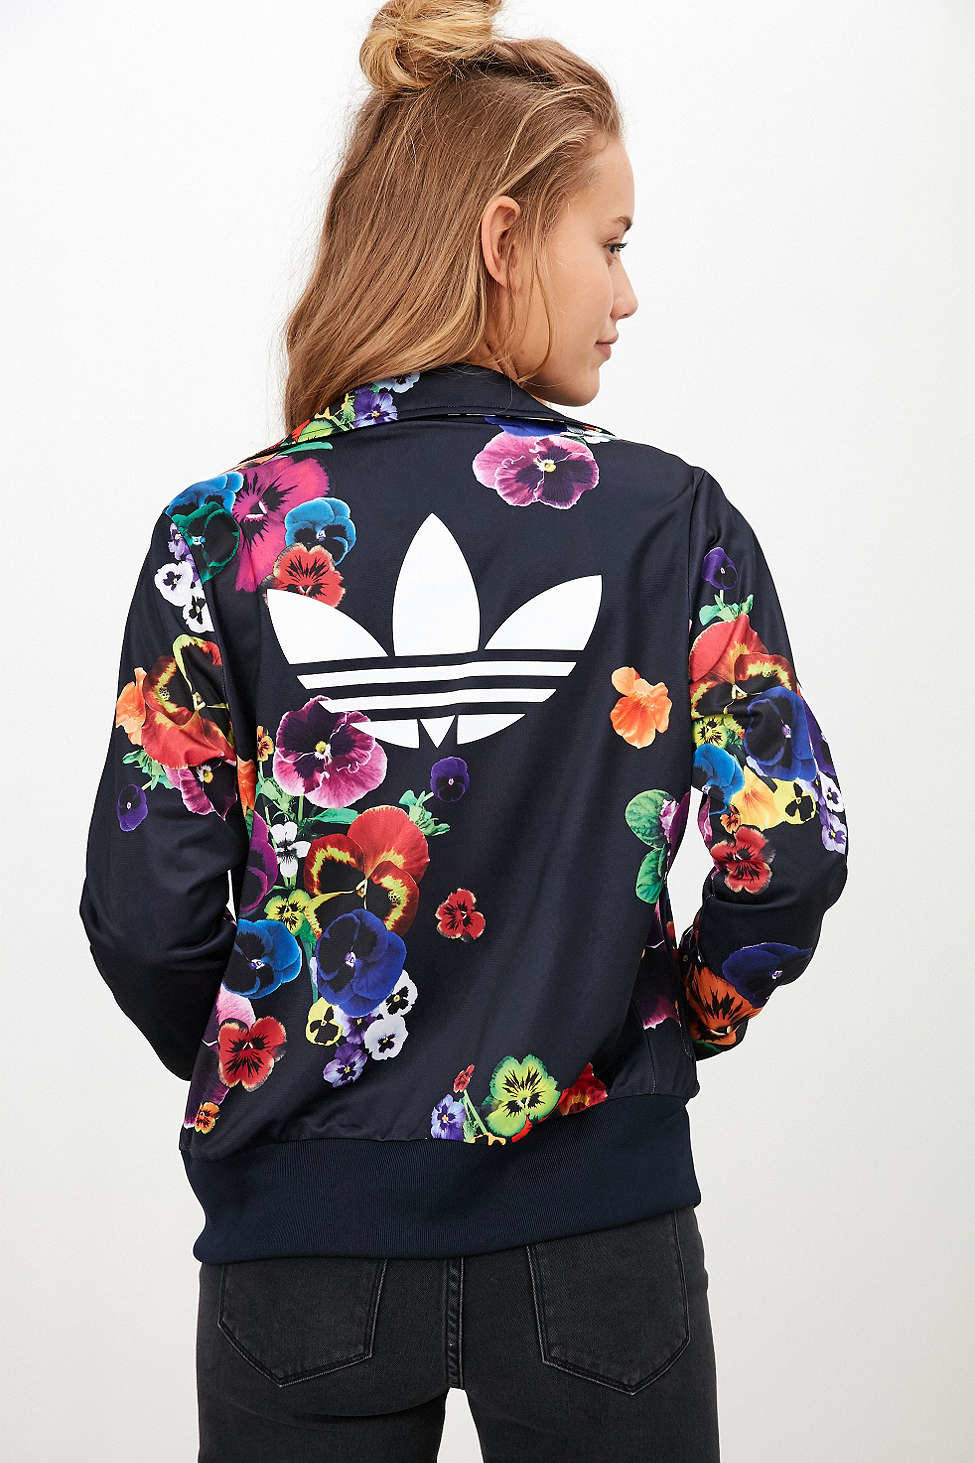 adidas floral bomber jacket Off 61% - talent-ways.com